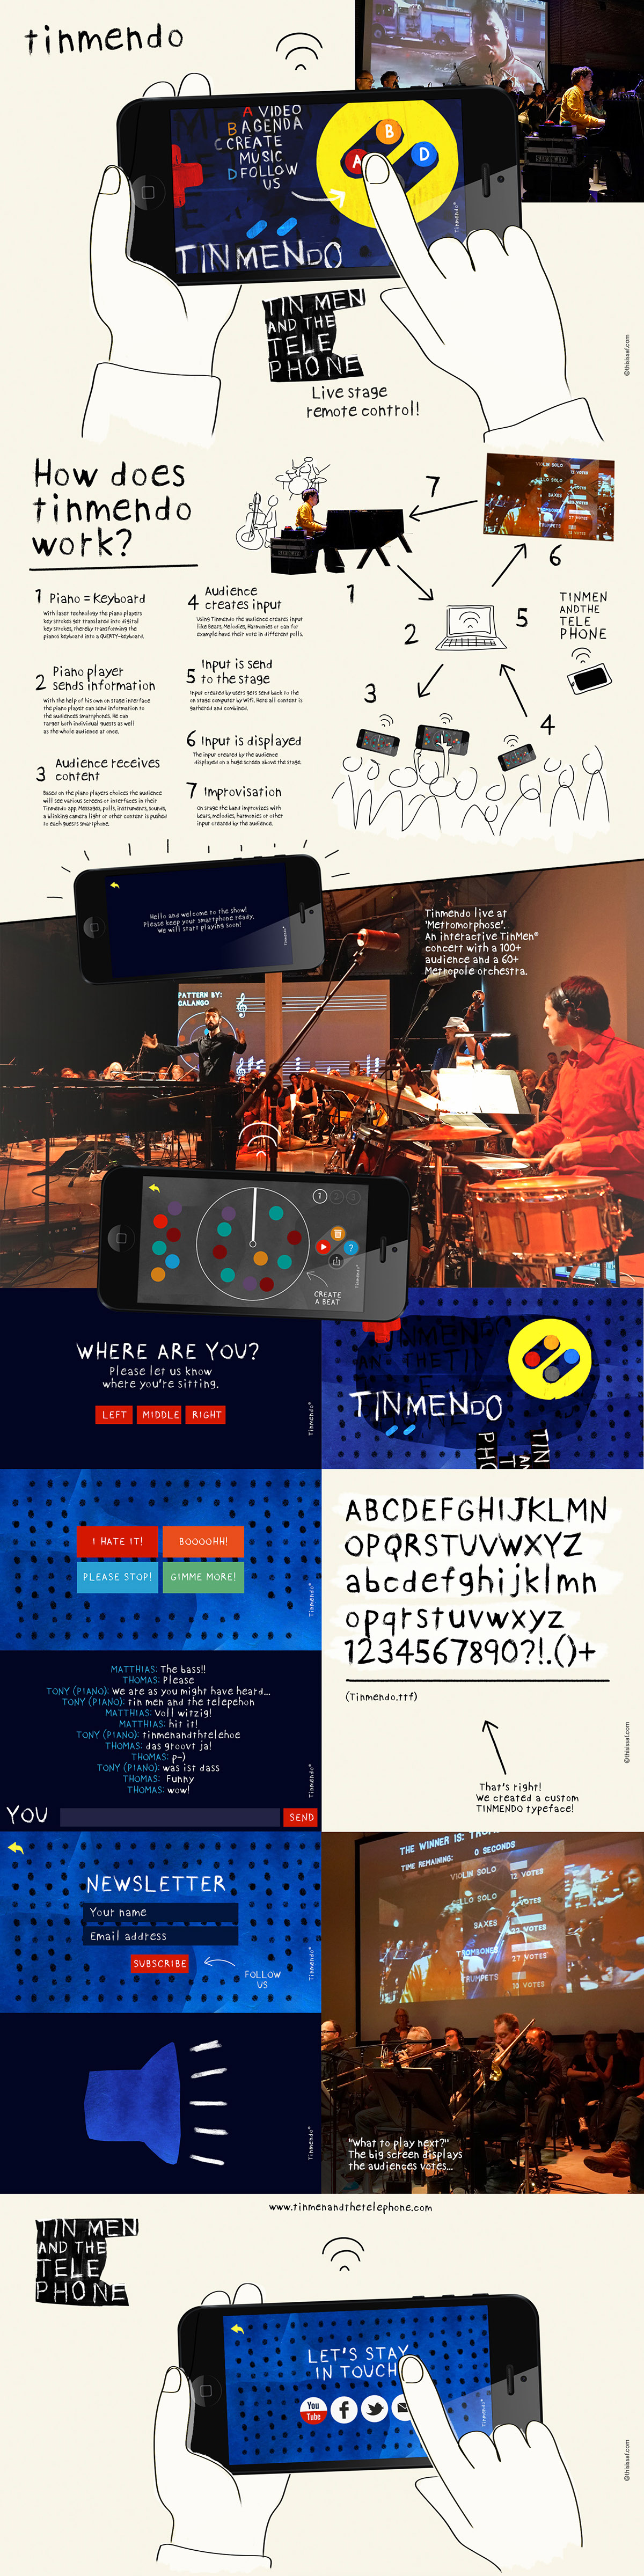 tinmenandthetelephone metropole thisissaf saf app iOS App Android App jazz interactive